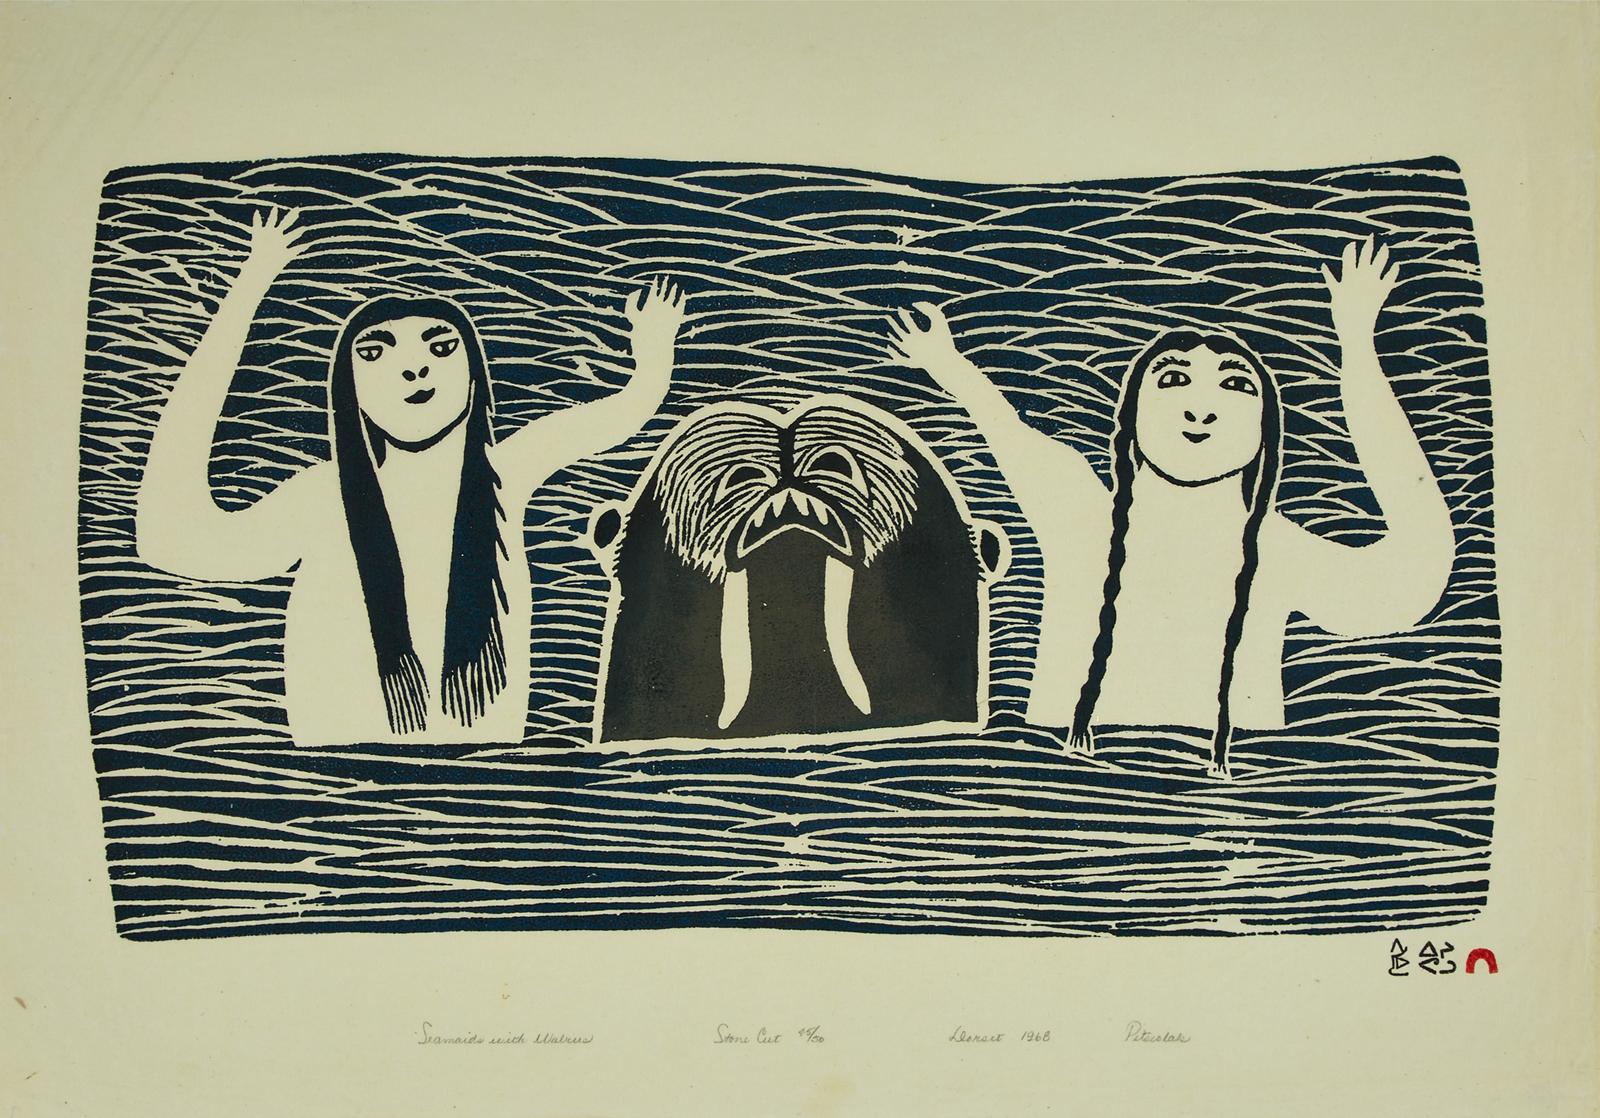 Pitseolak Ashoona (1904-1983) - Seamaids With Walrus